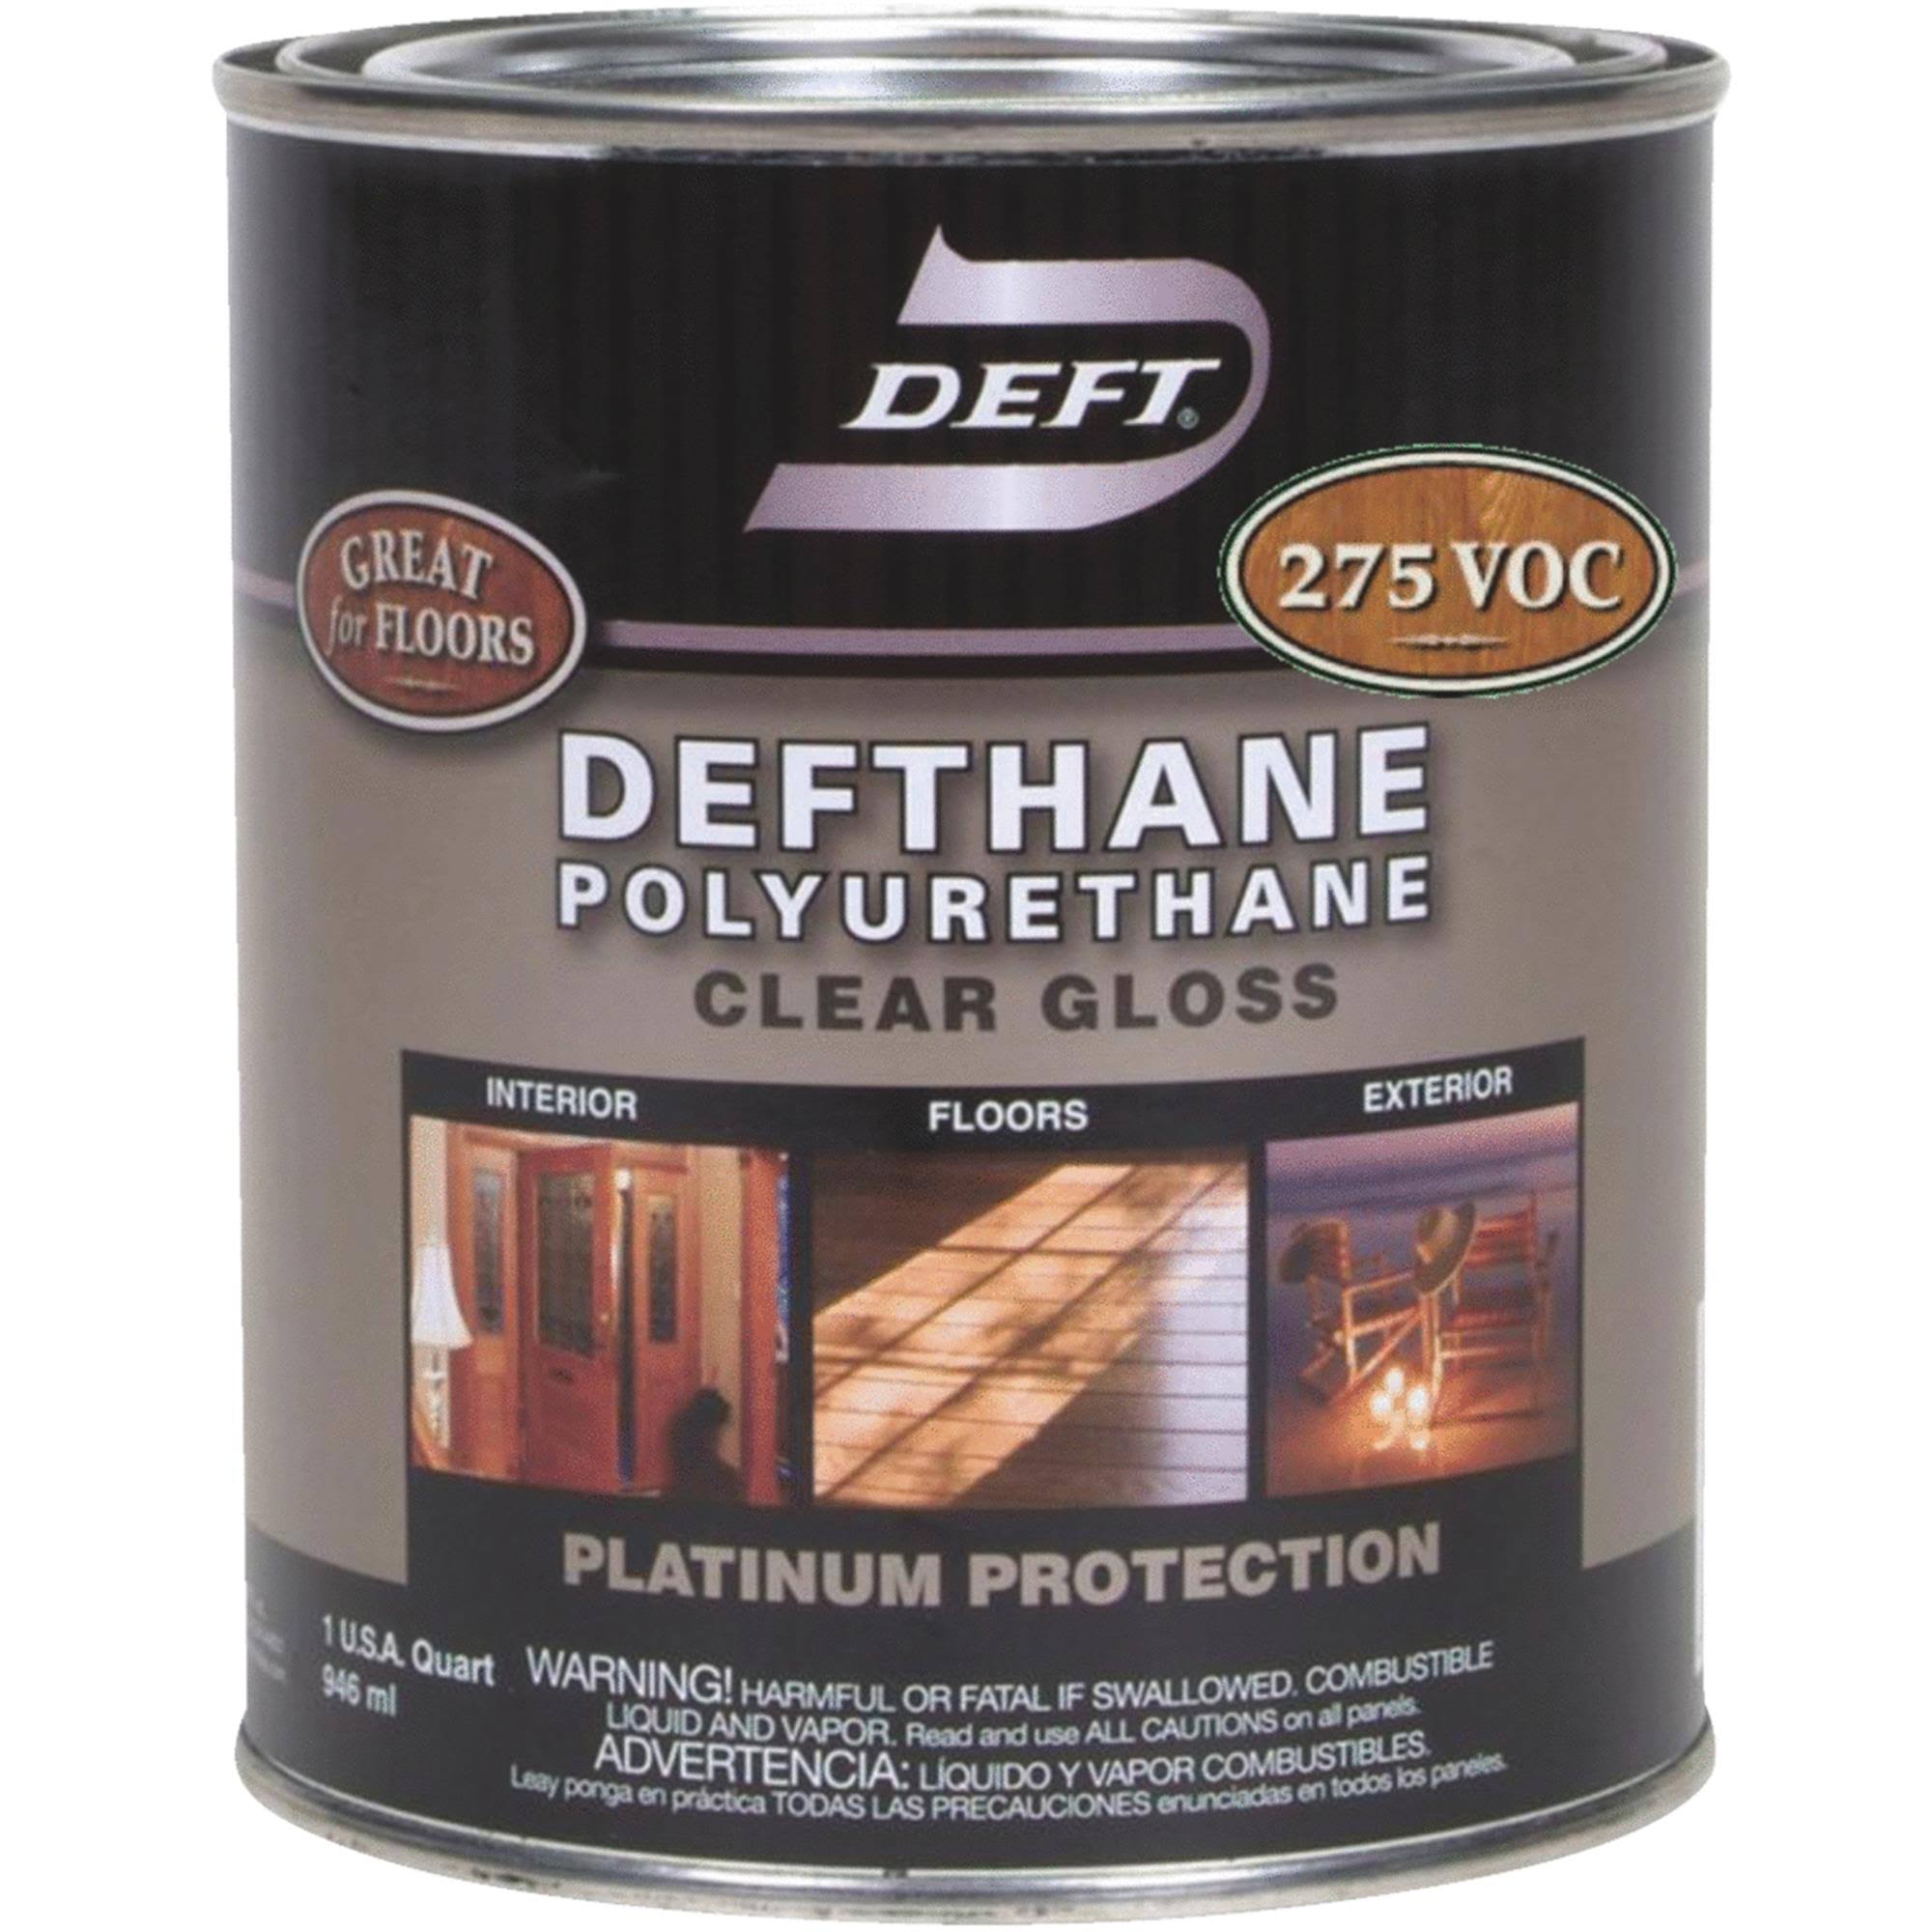 Deft Defthane Polyurethane Clear Gloss Platinum Protection